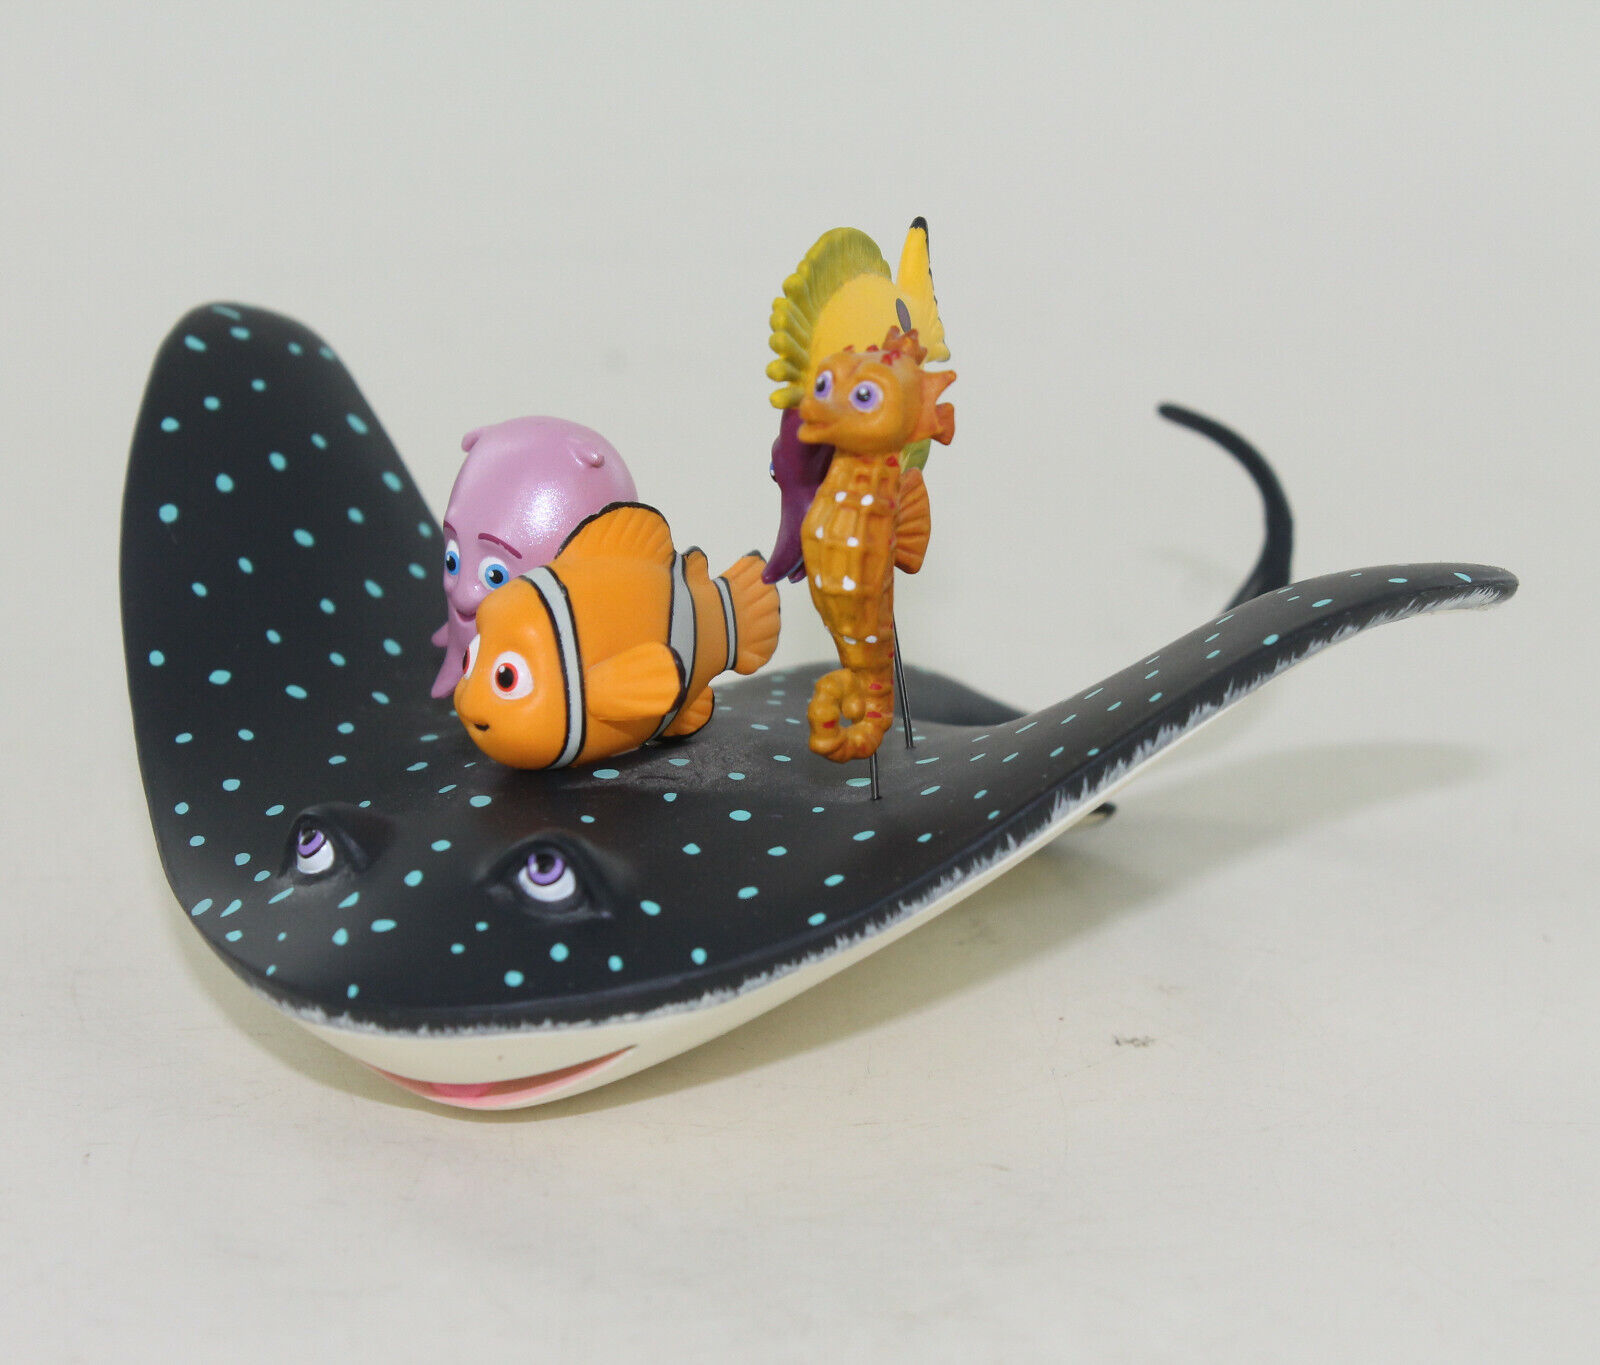 2009 Disney Pixar & Hallmark Finding Nemo Ornament - Learning with Mr. Ray